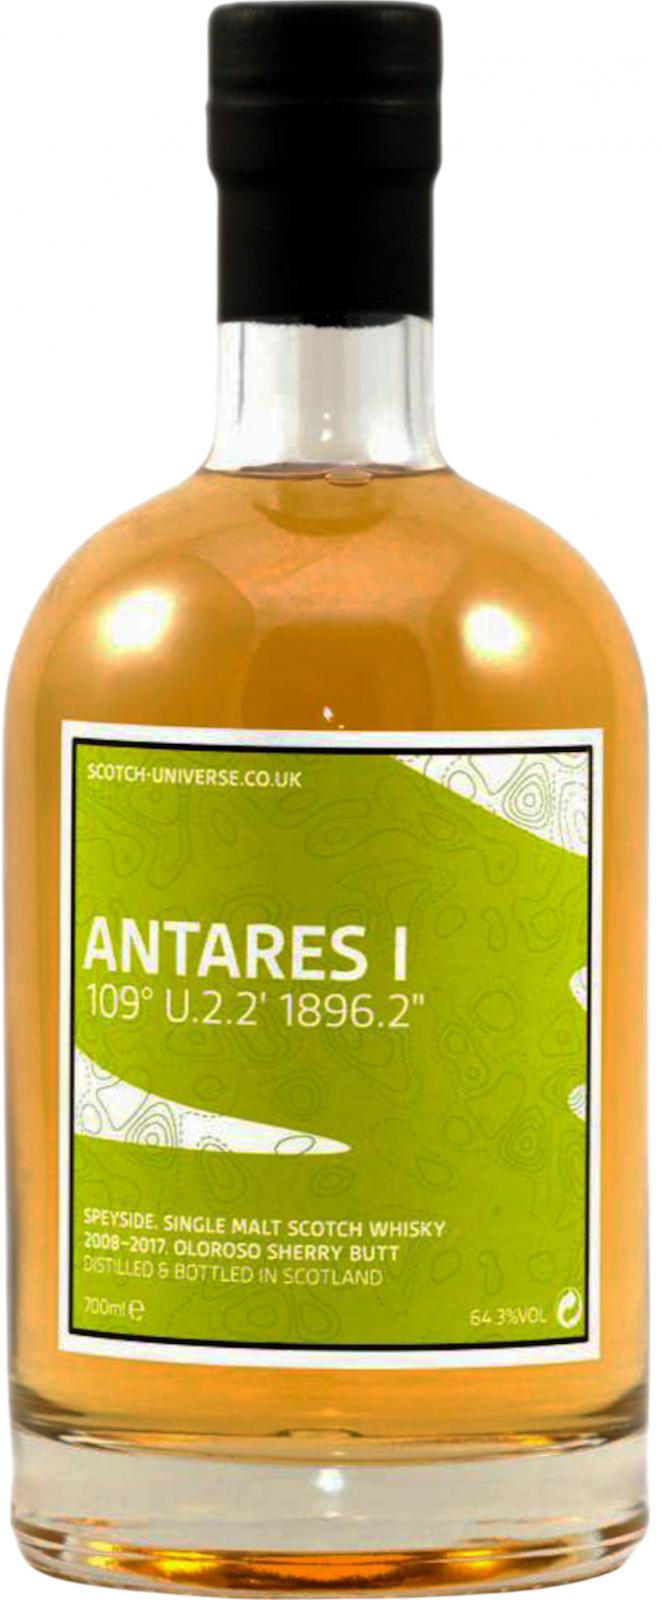 Scotch Universe Antares I - 109° U.2.2&#x27; 1896.2&#x27;&#x27;